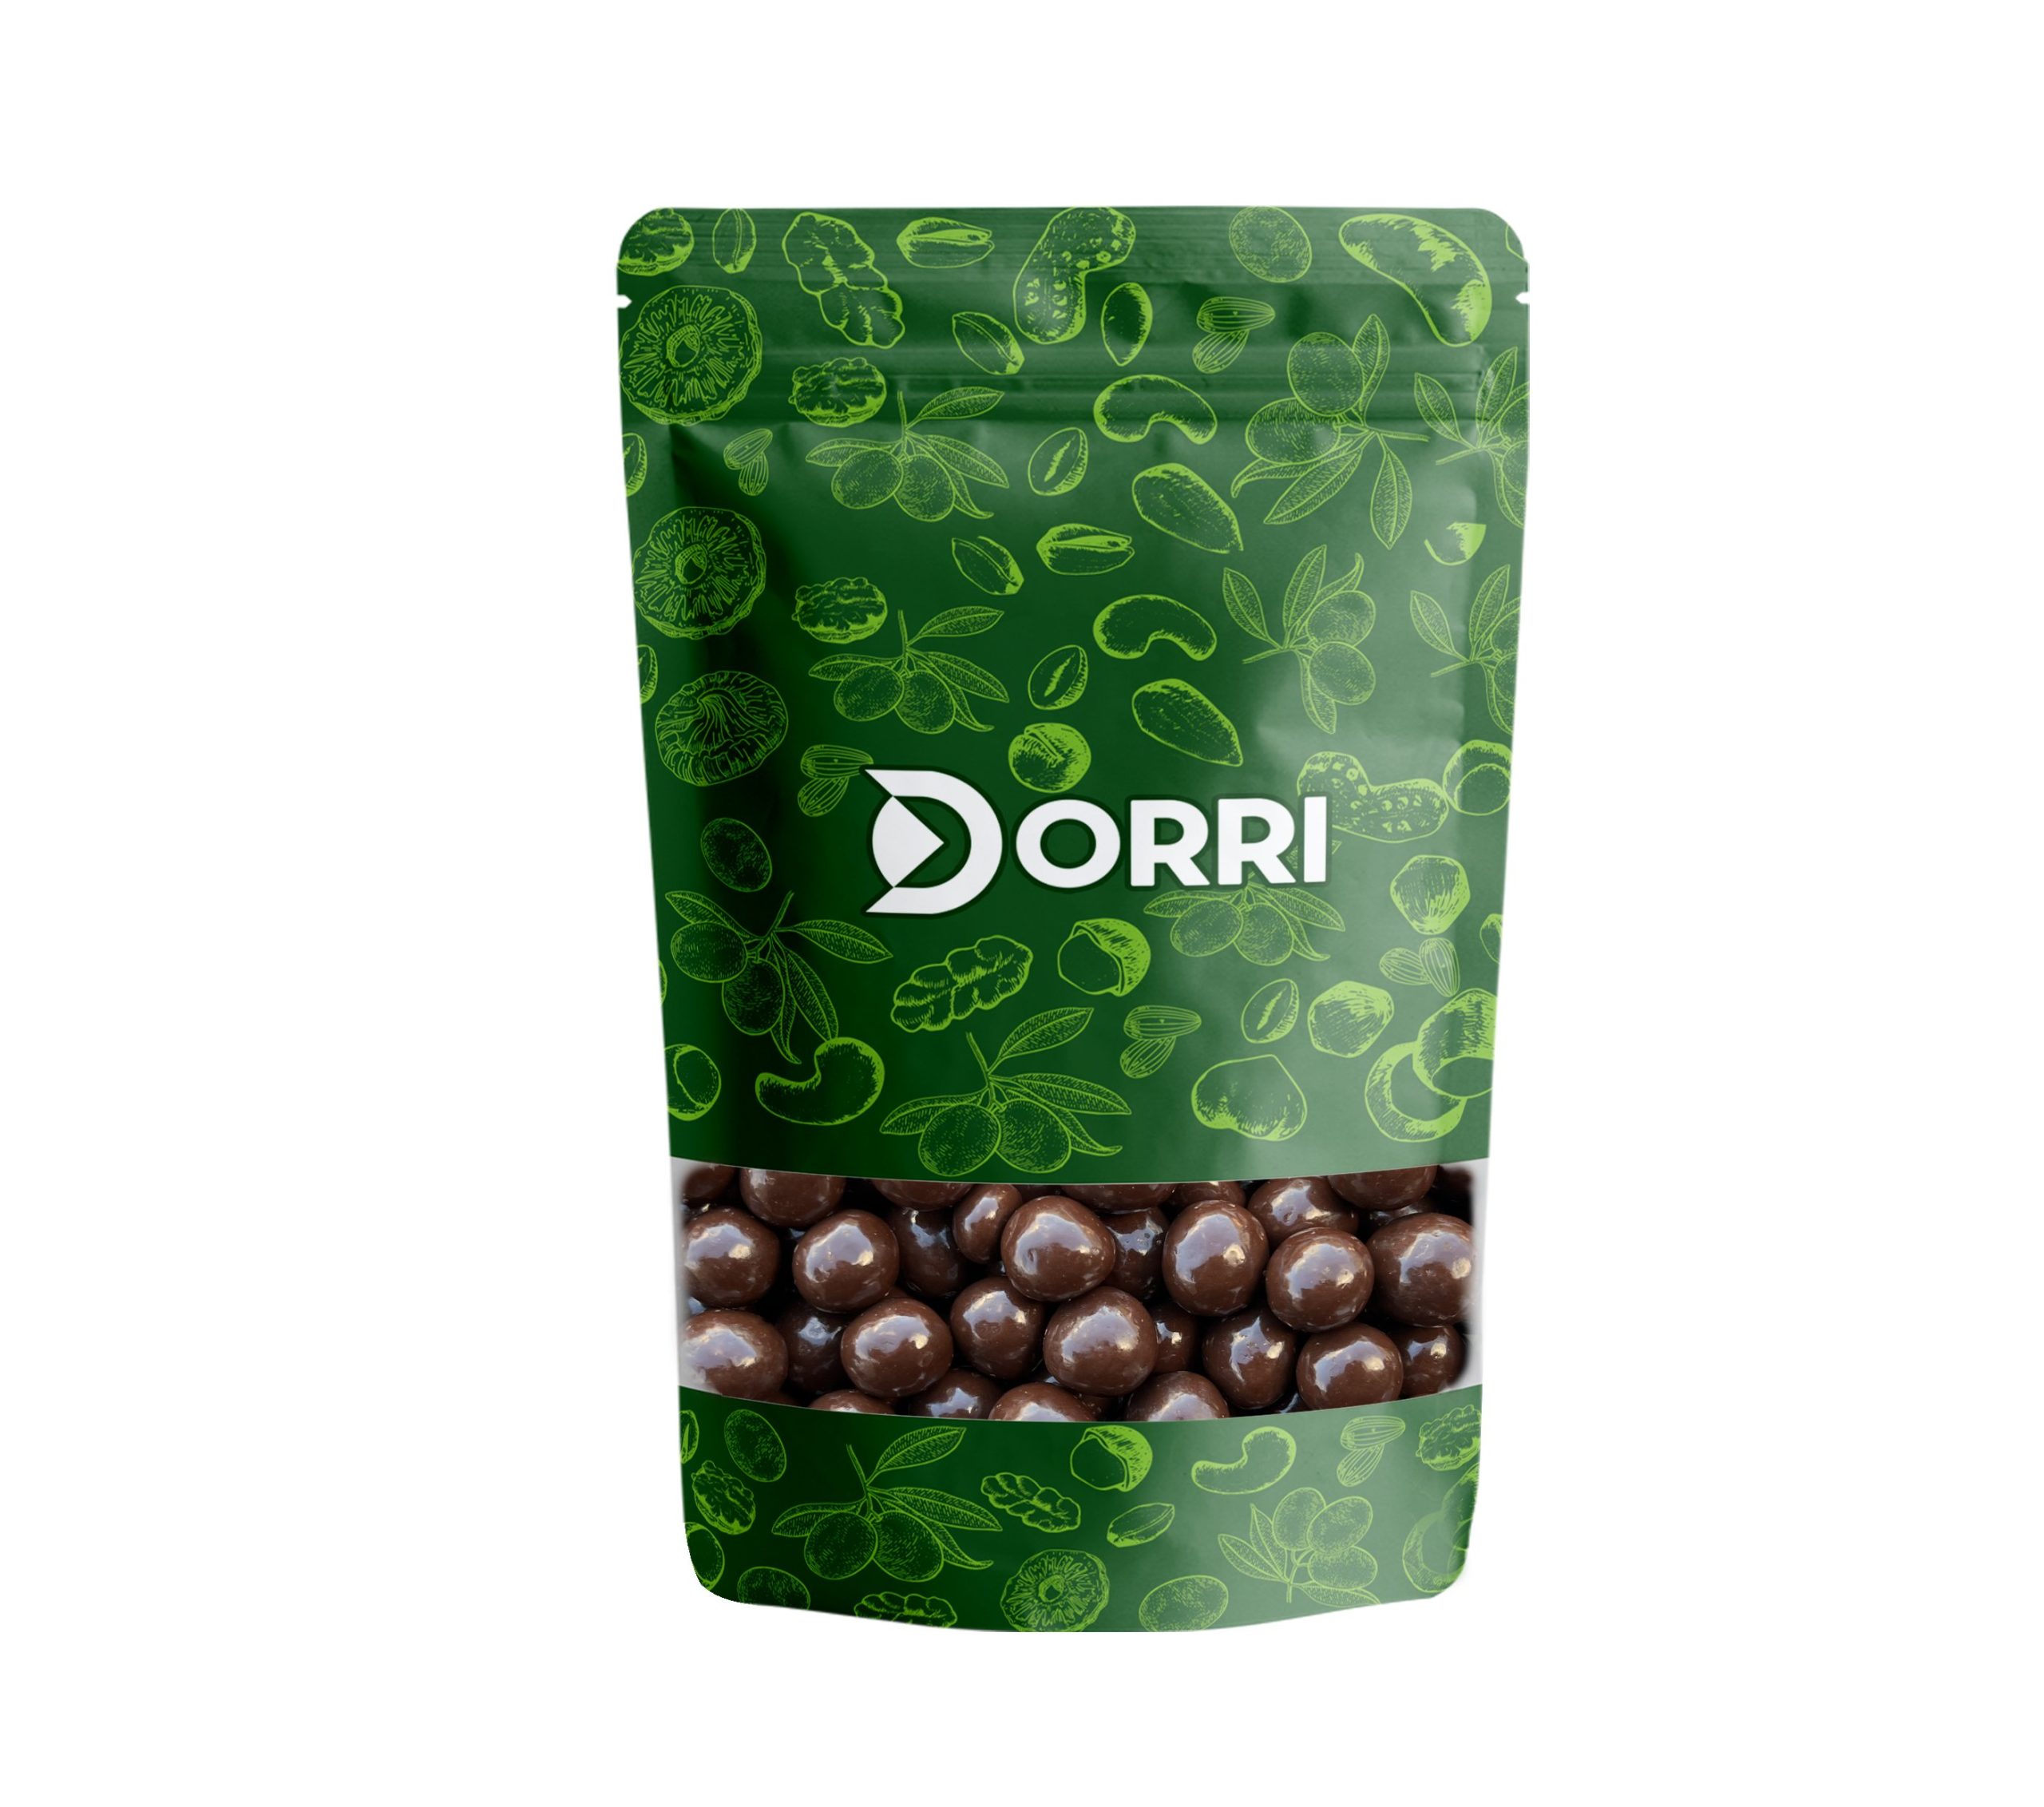 Dorri - Dark Chocolate Covered Hazelnuts